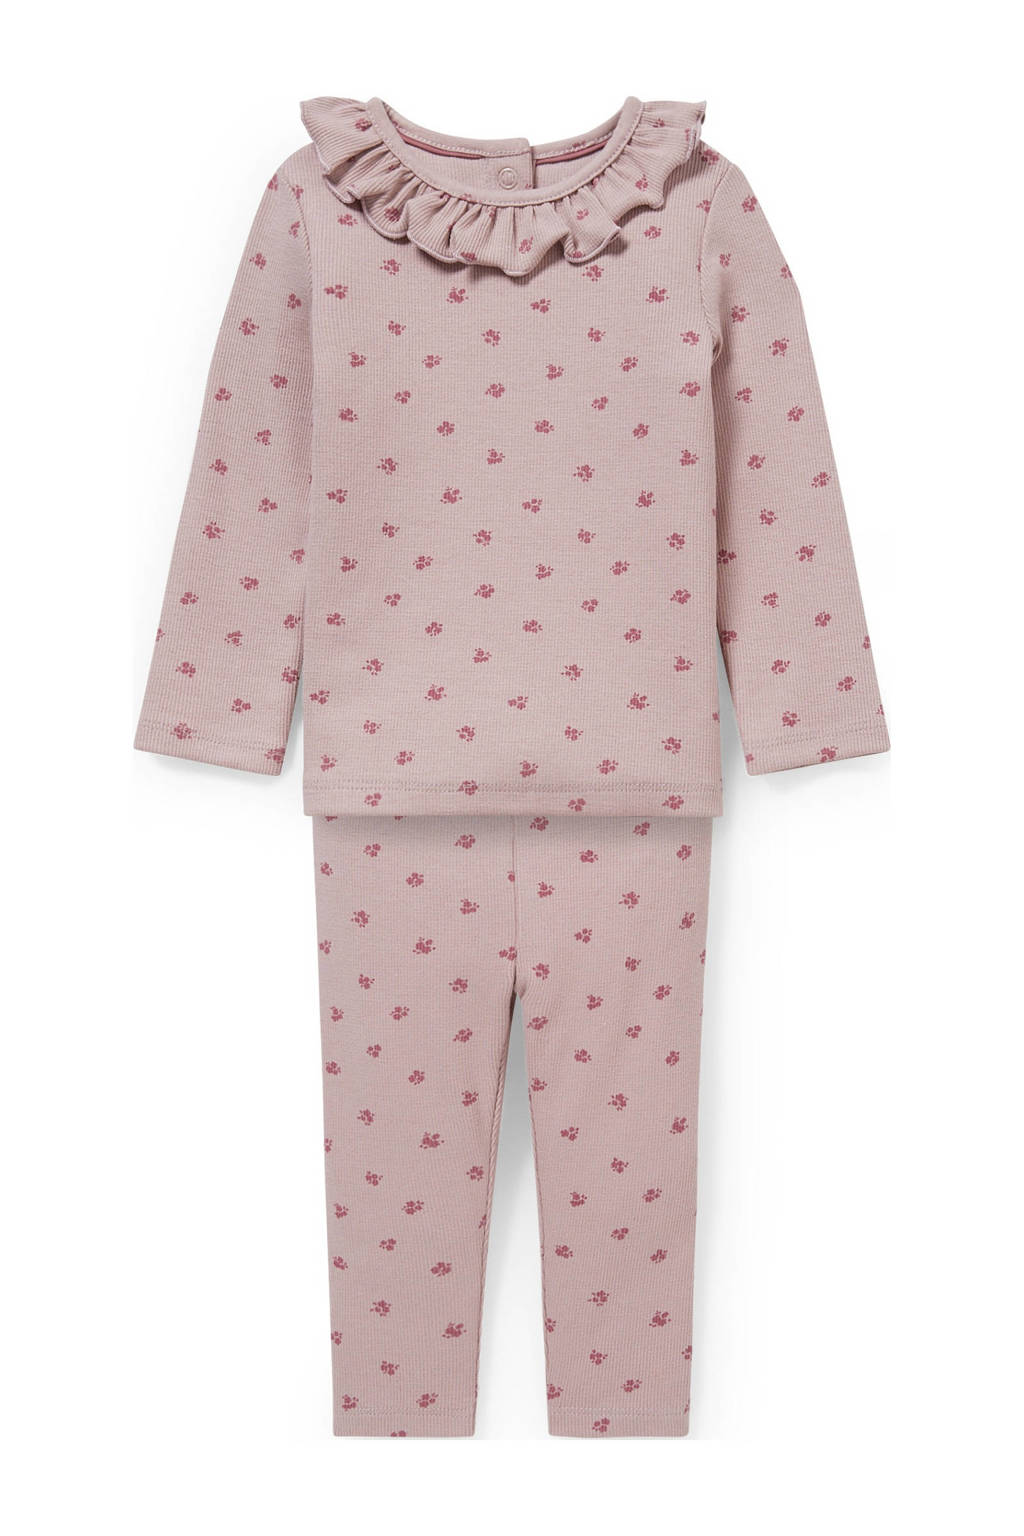 C&A Baby Club longsleeve + legging roze